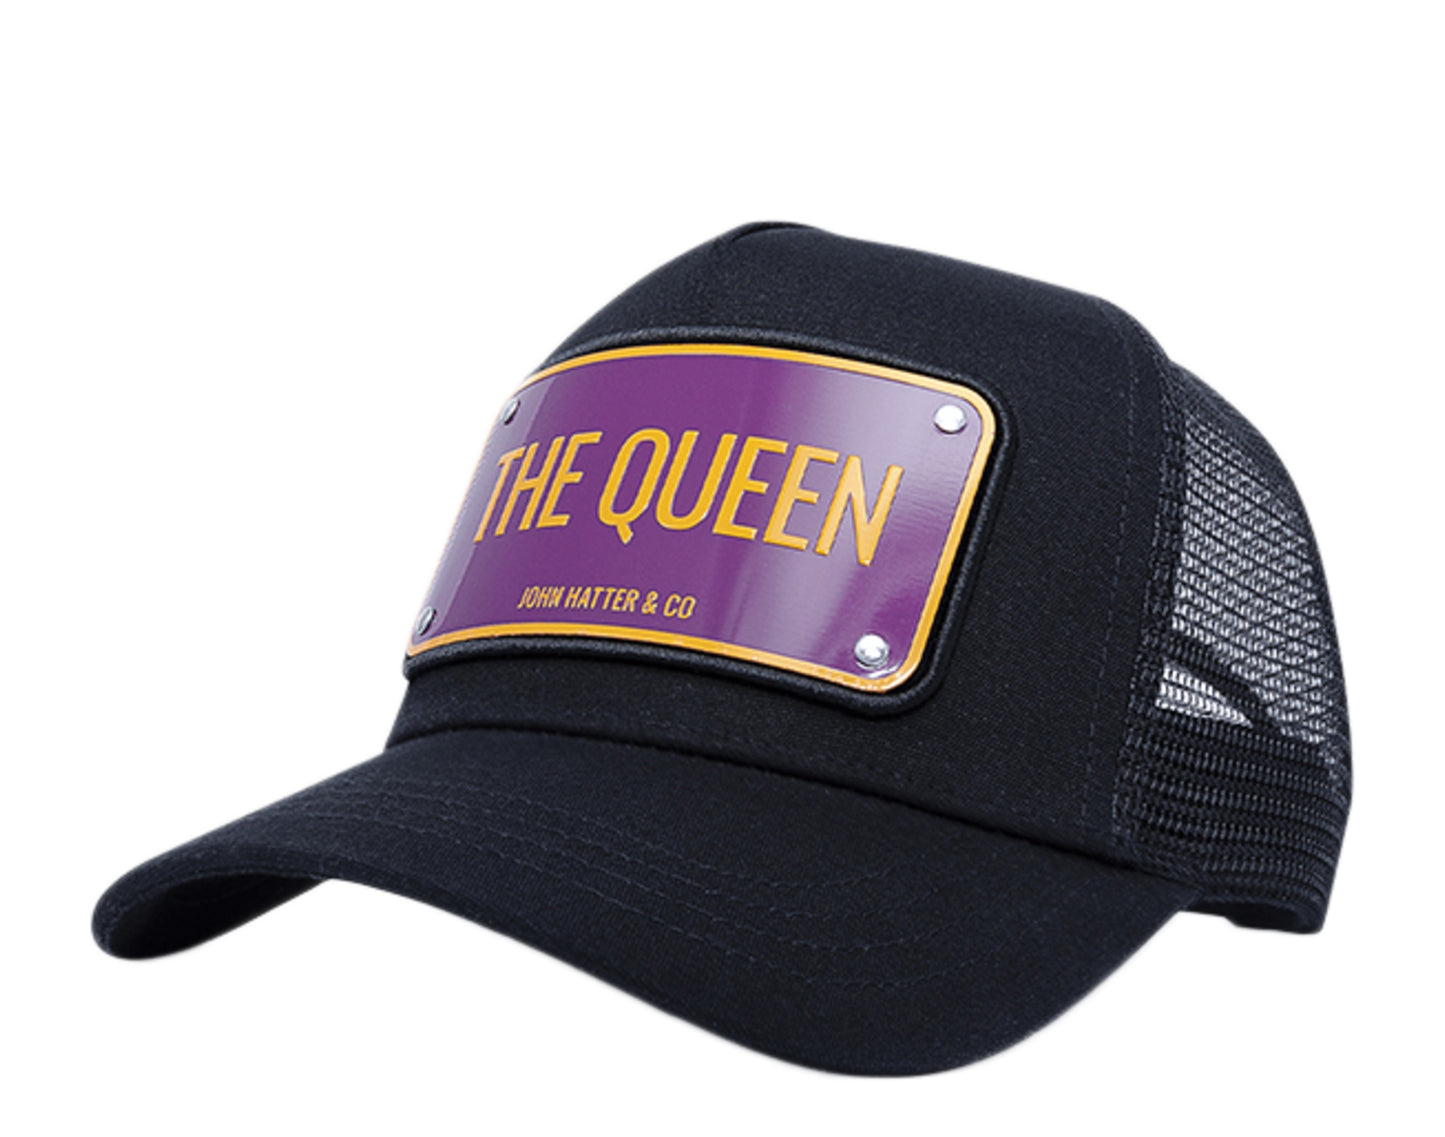 John Hatter & Co The Queen Black/Purple/Orange Trucker Hat 1019-BLACK